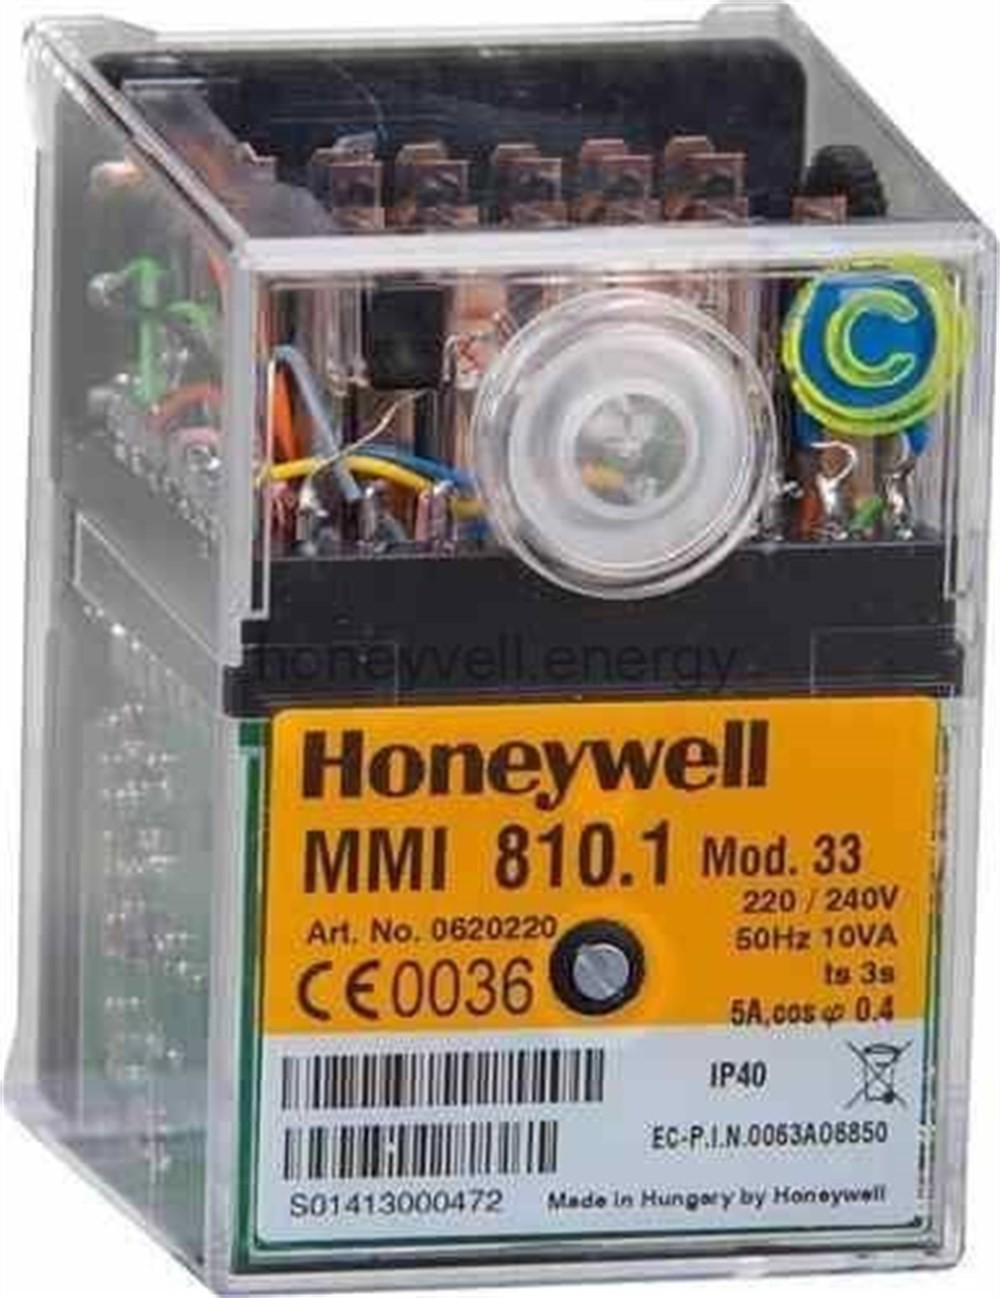 HONEYWELL Satronic MMI 810 MOD 33 Brulor Burner